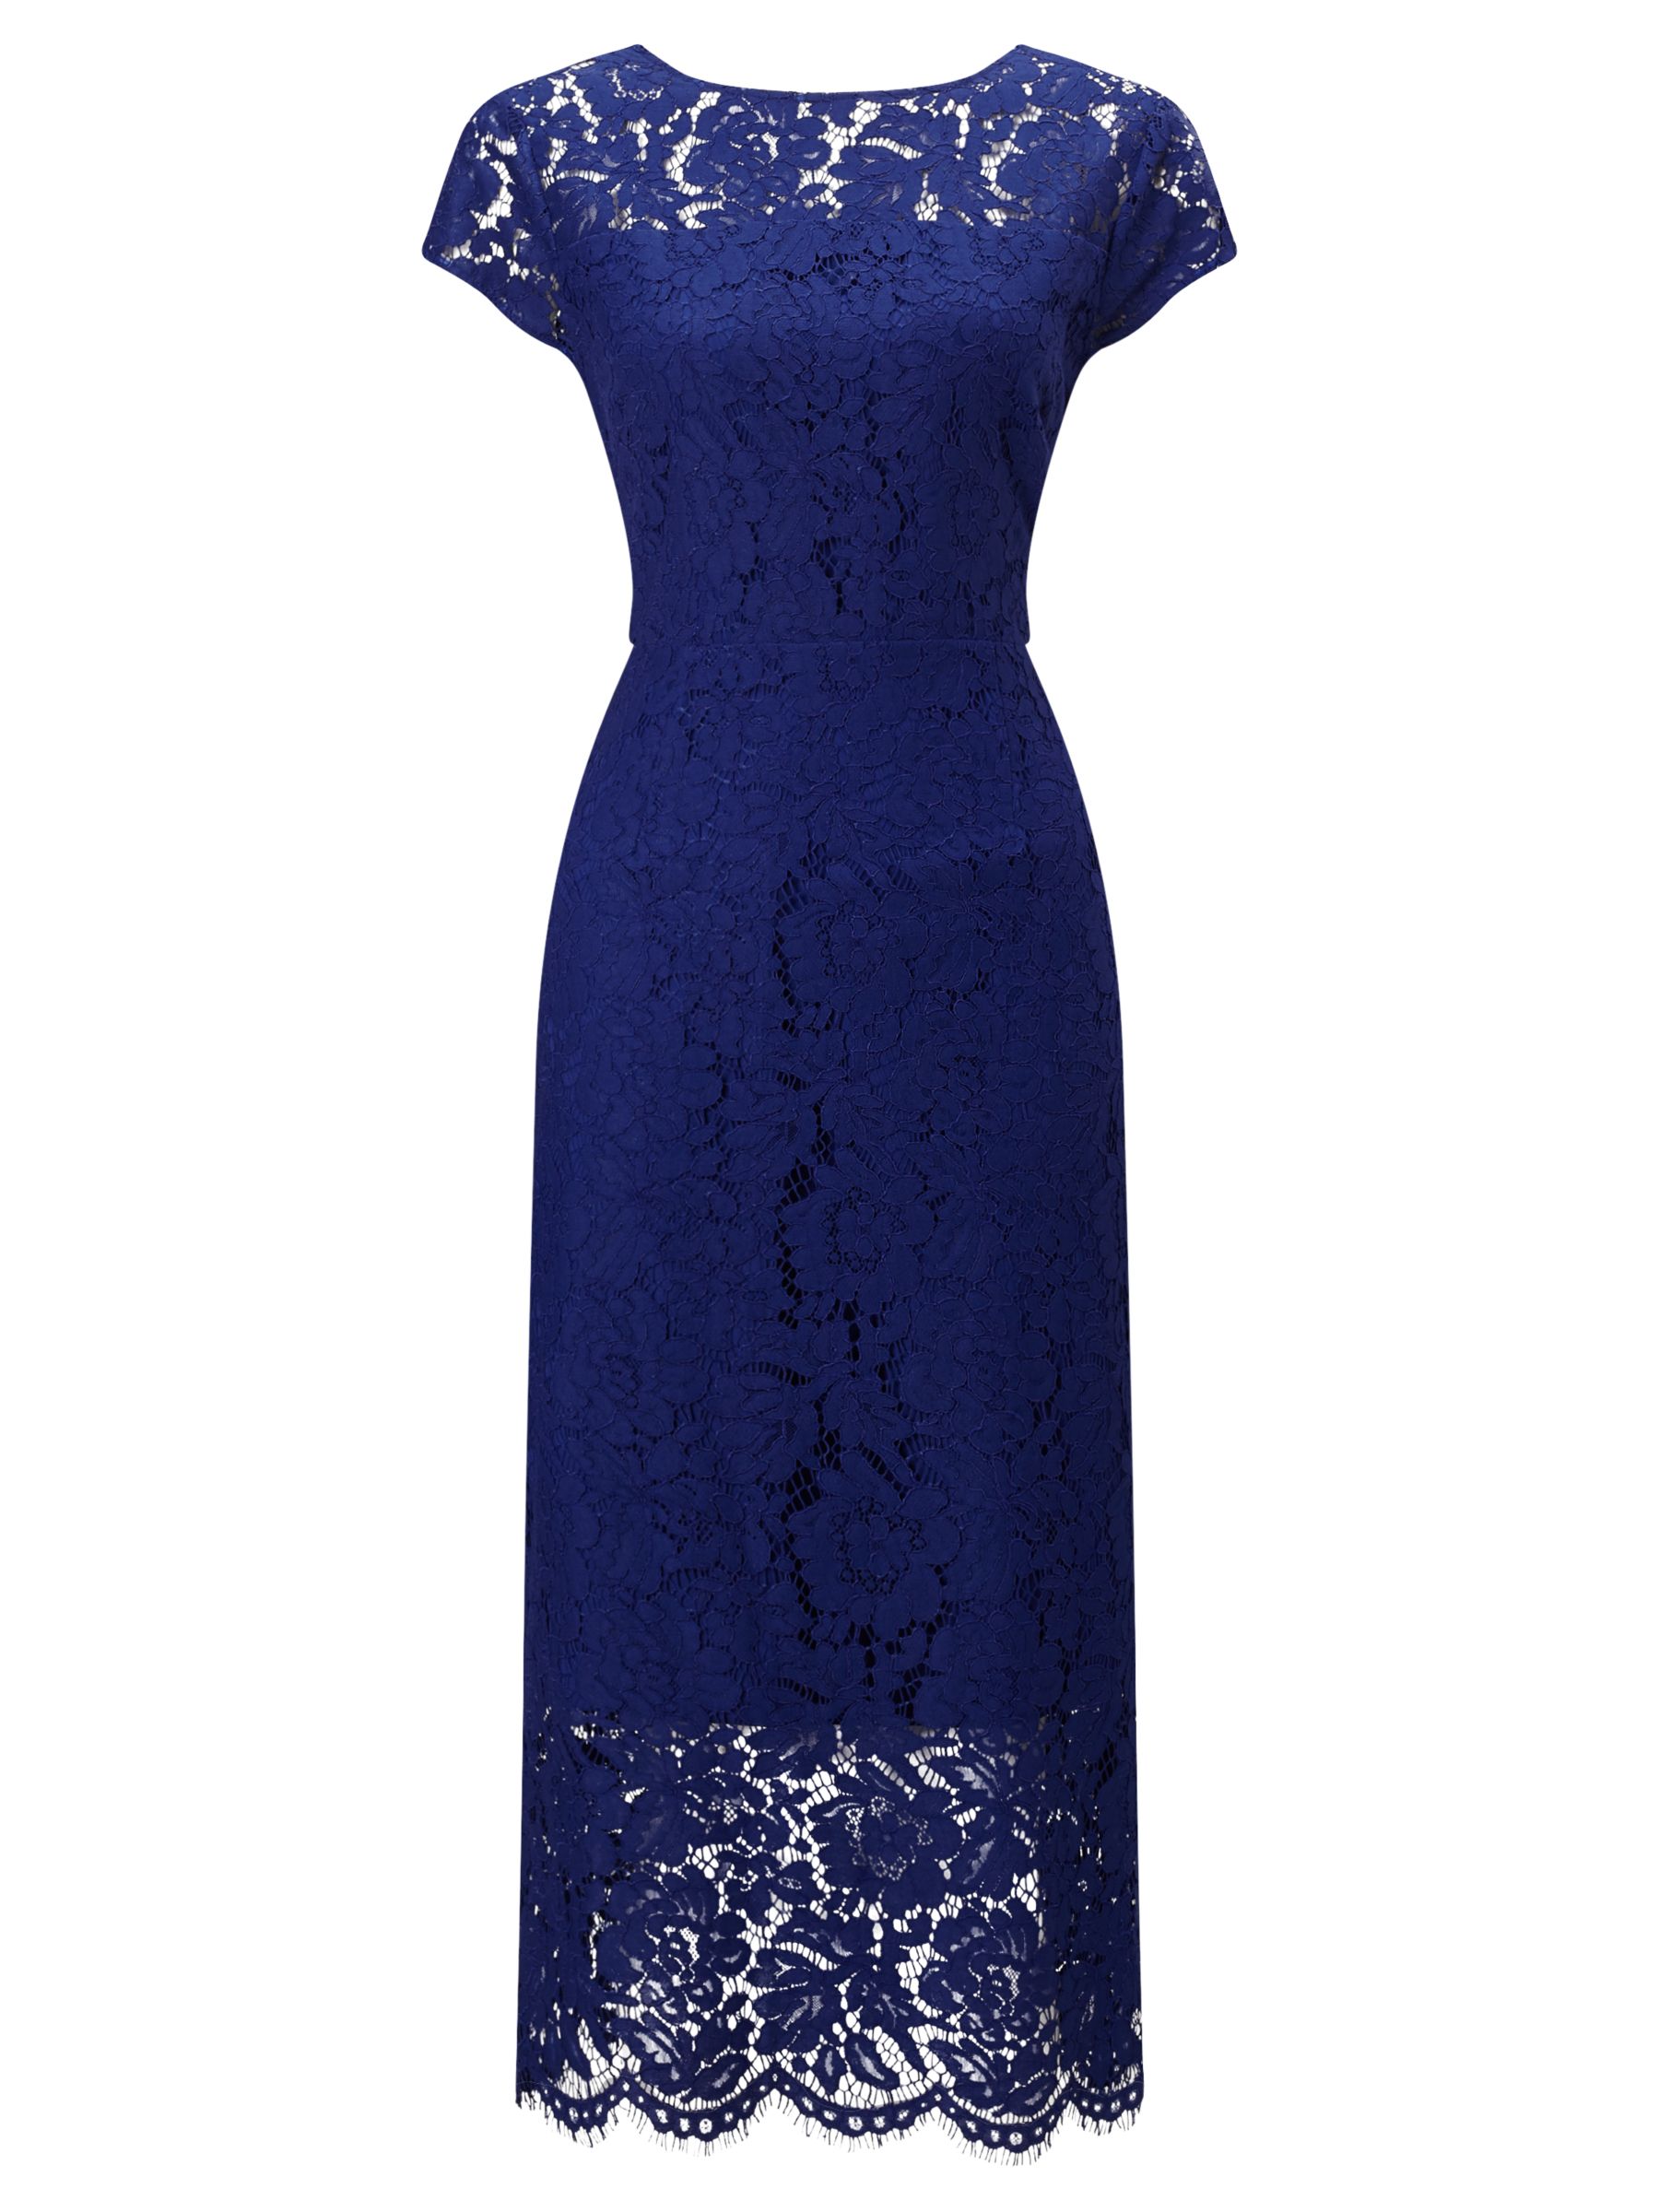 John Lewis & Partners Short Sleeve Lace Dress, Blue, 10